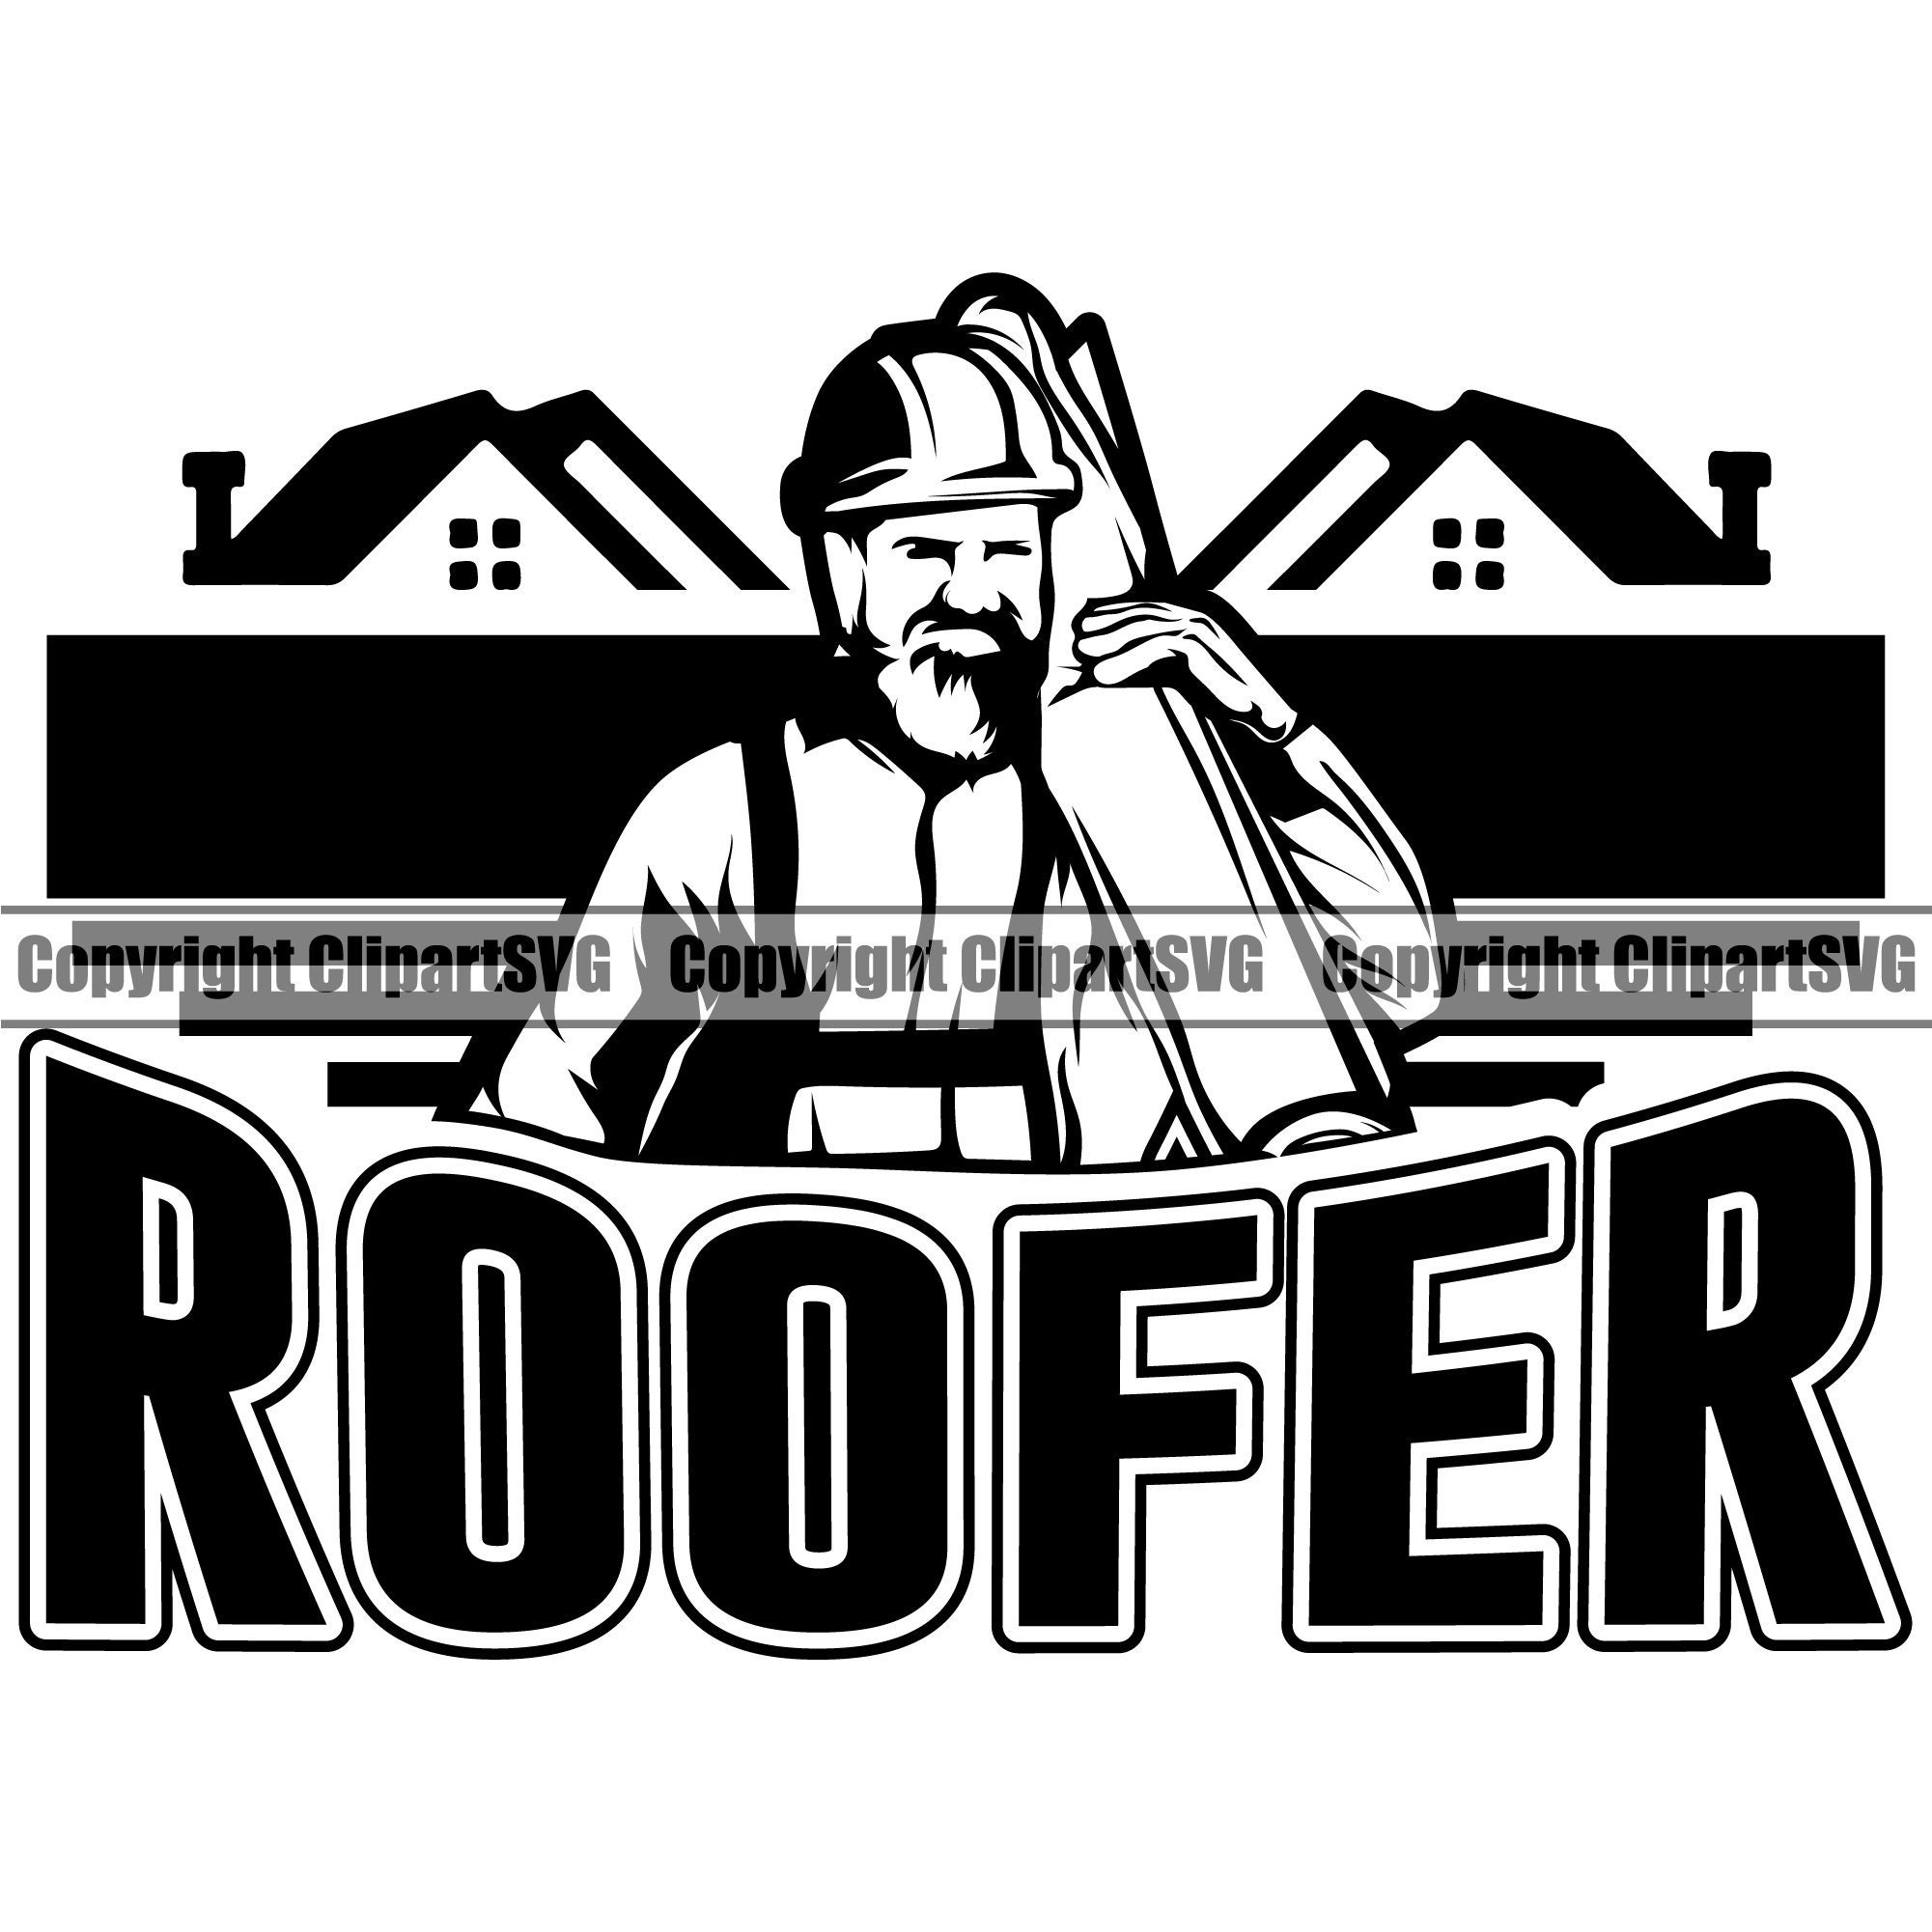 Roofer Roof Roofing Construction Build Builder Handyman Work